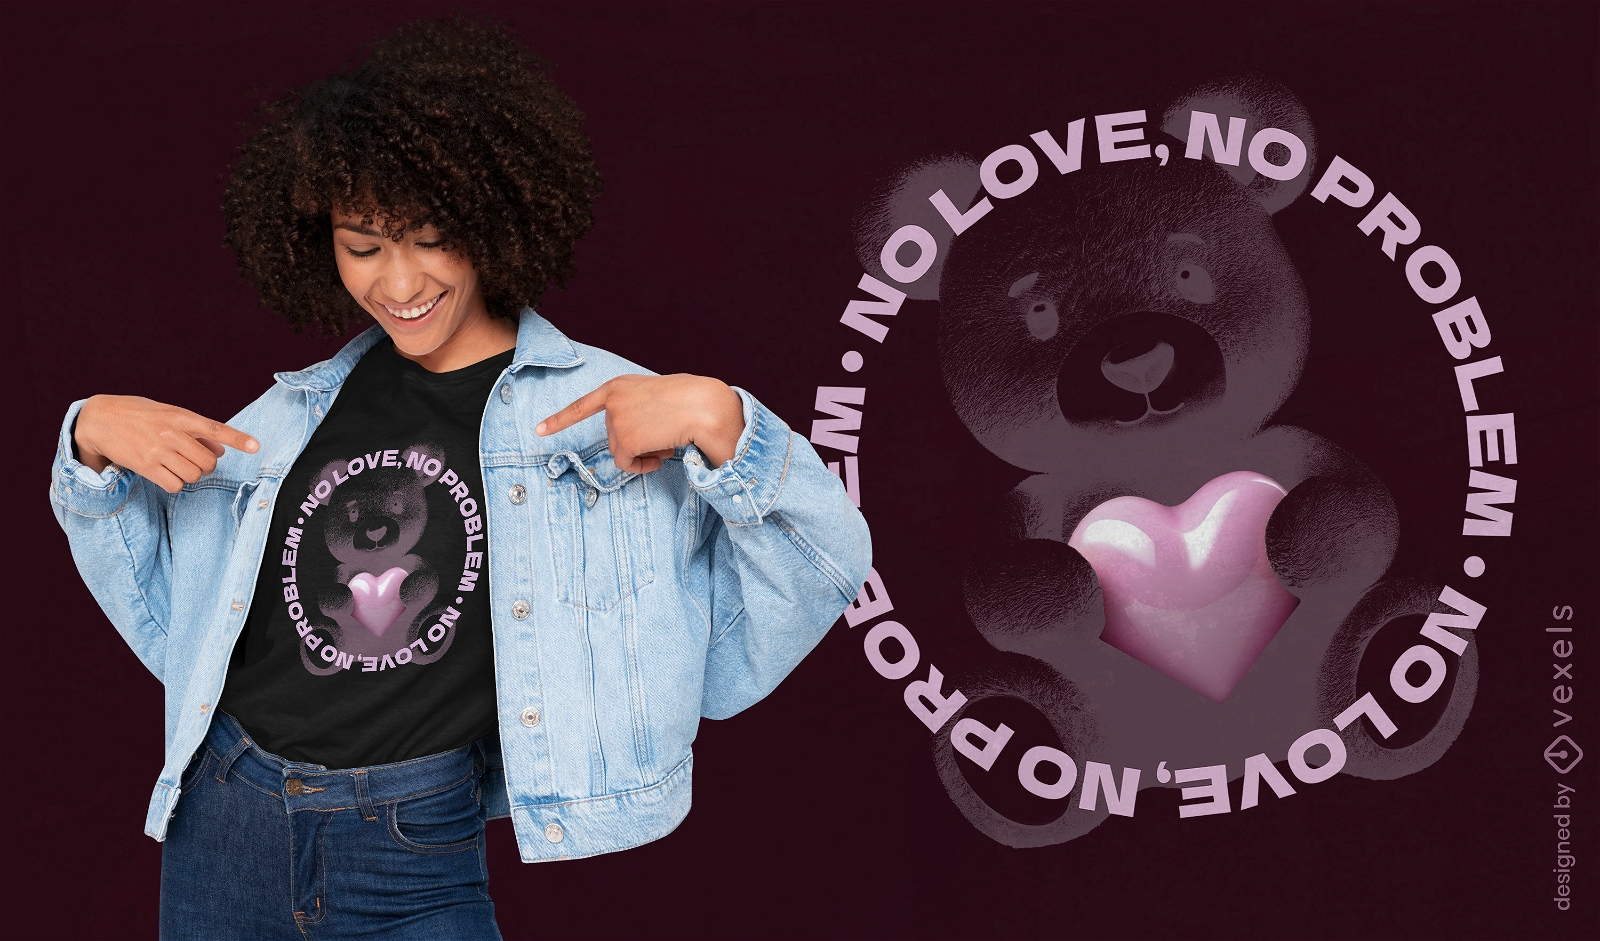 No love no problem t-shirt design